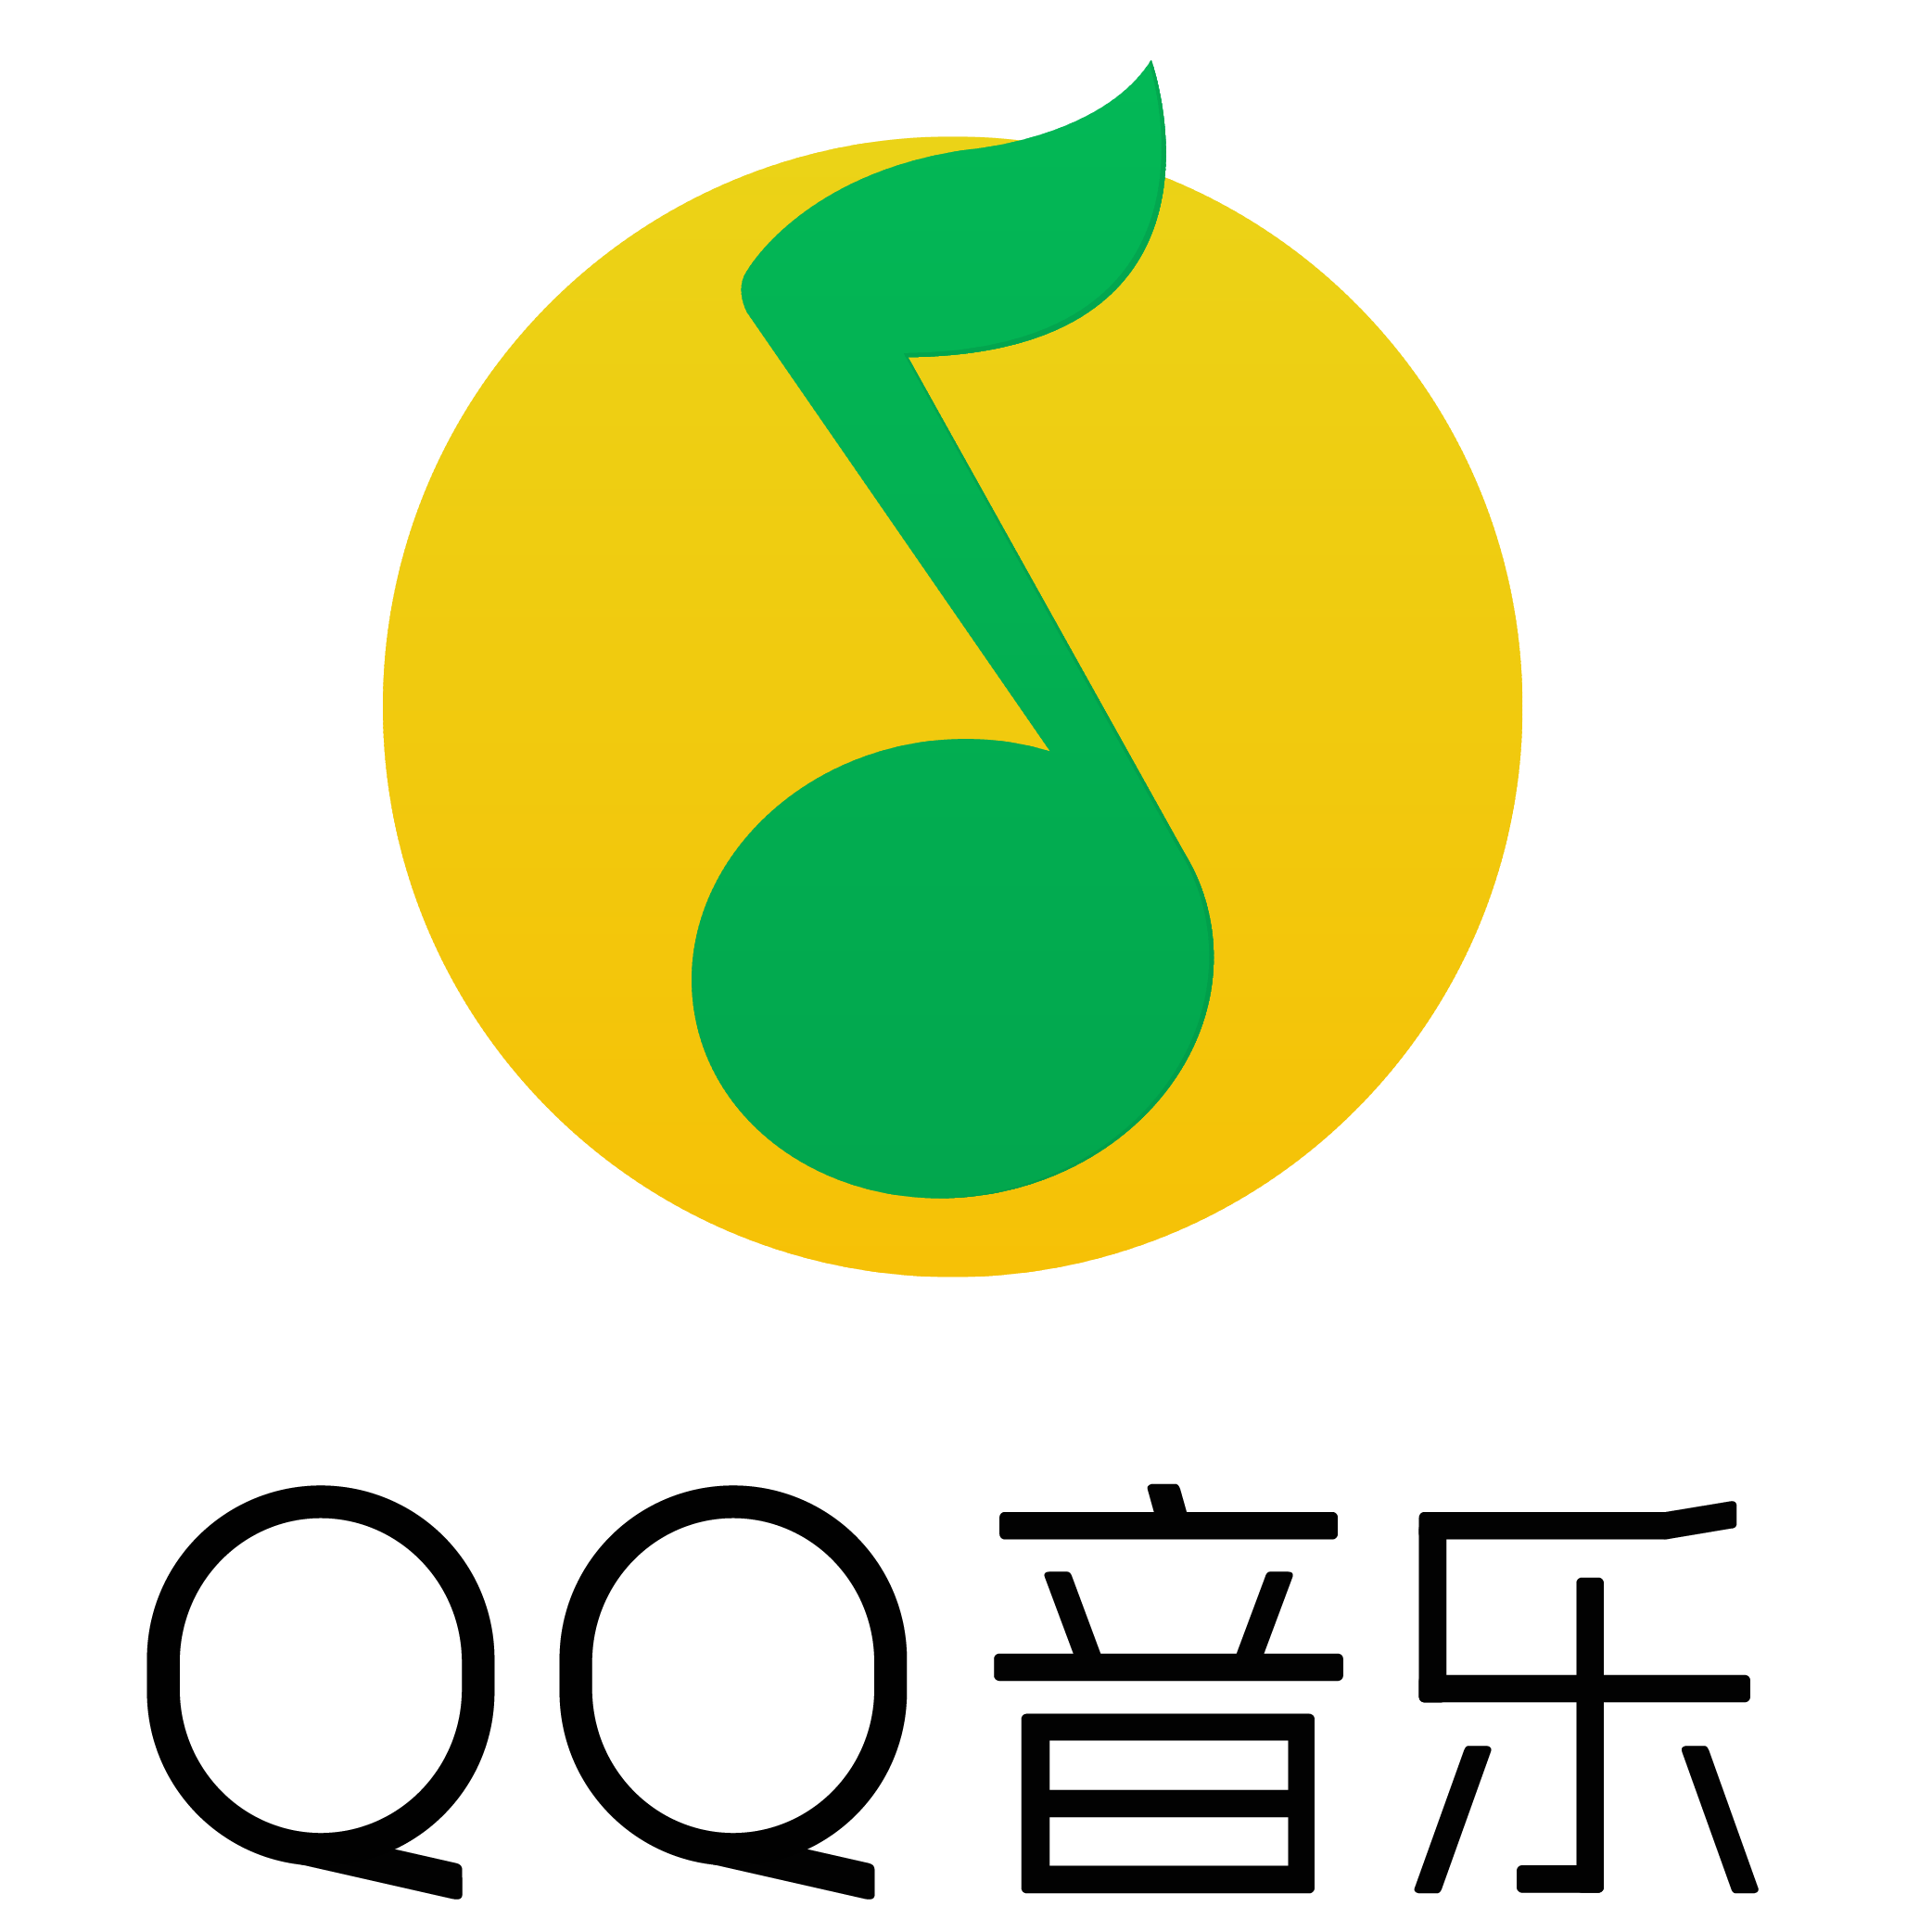 qq音乐图标 logo图片